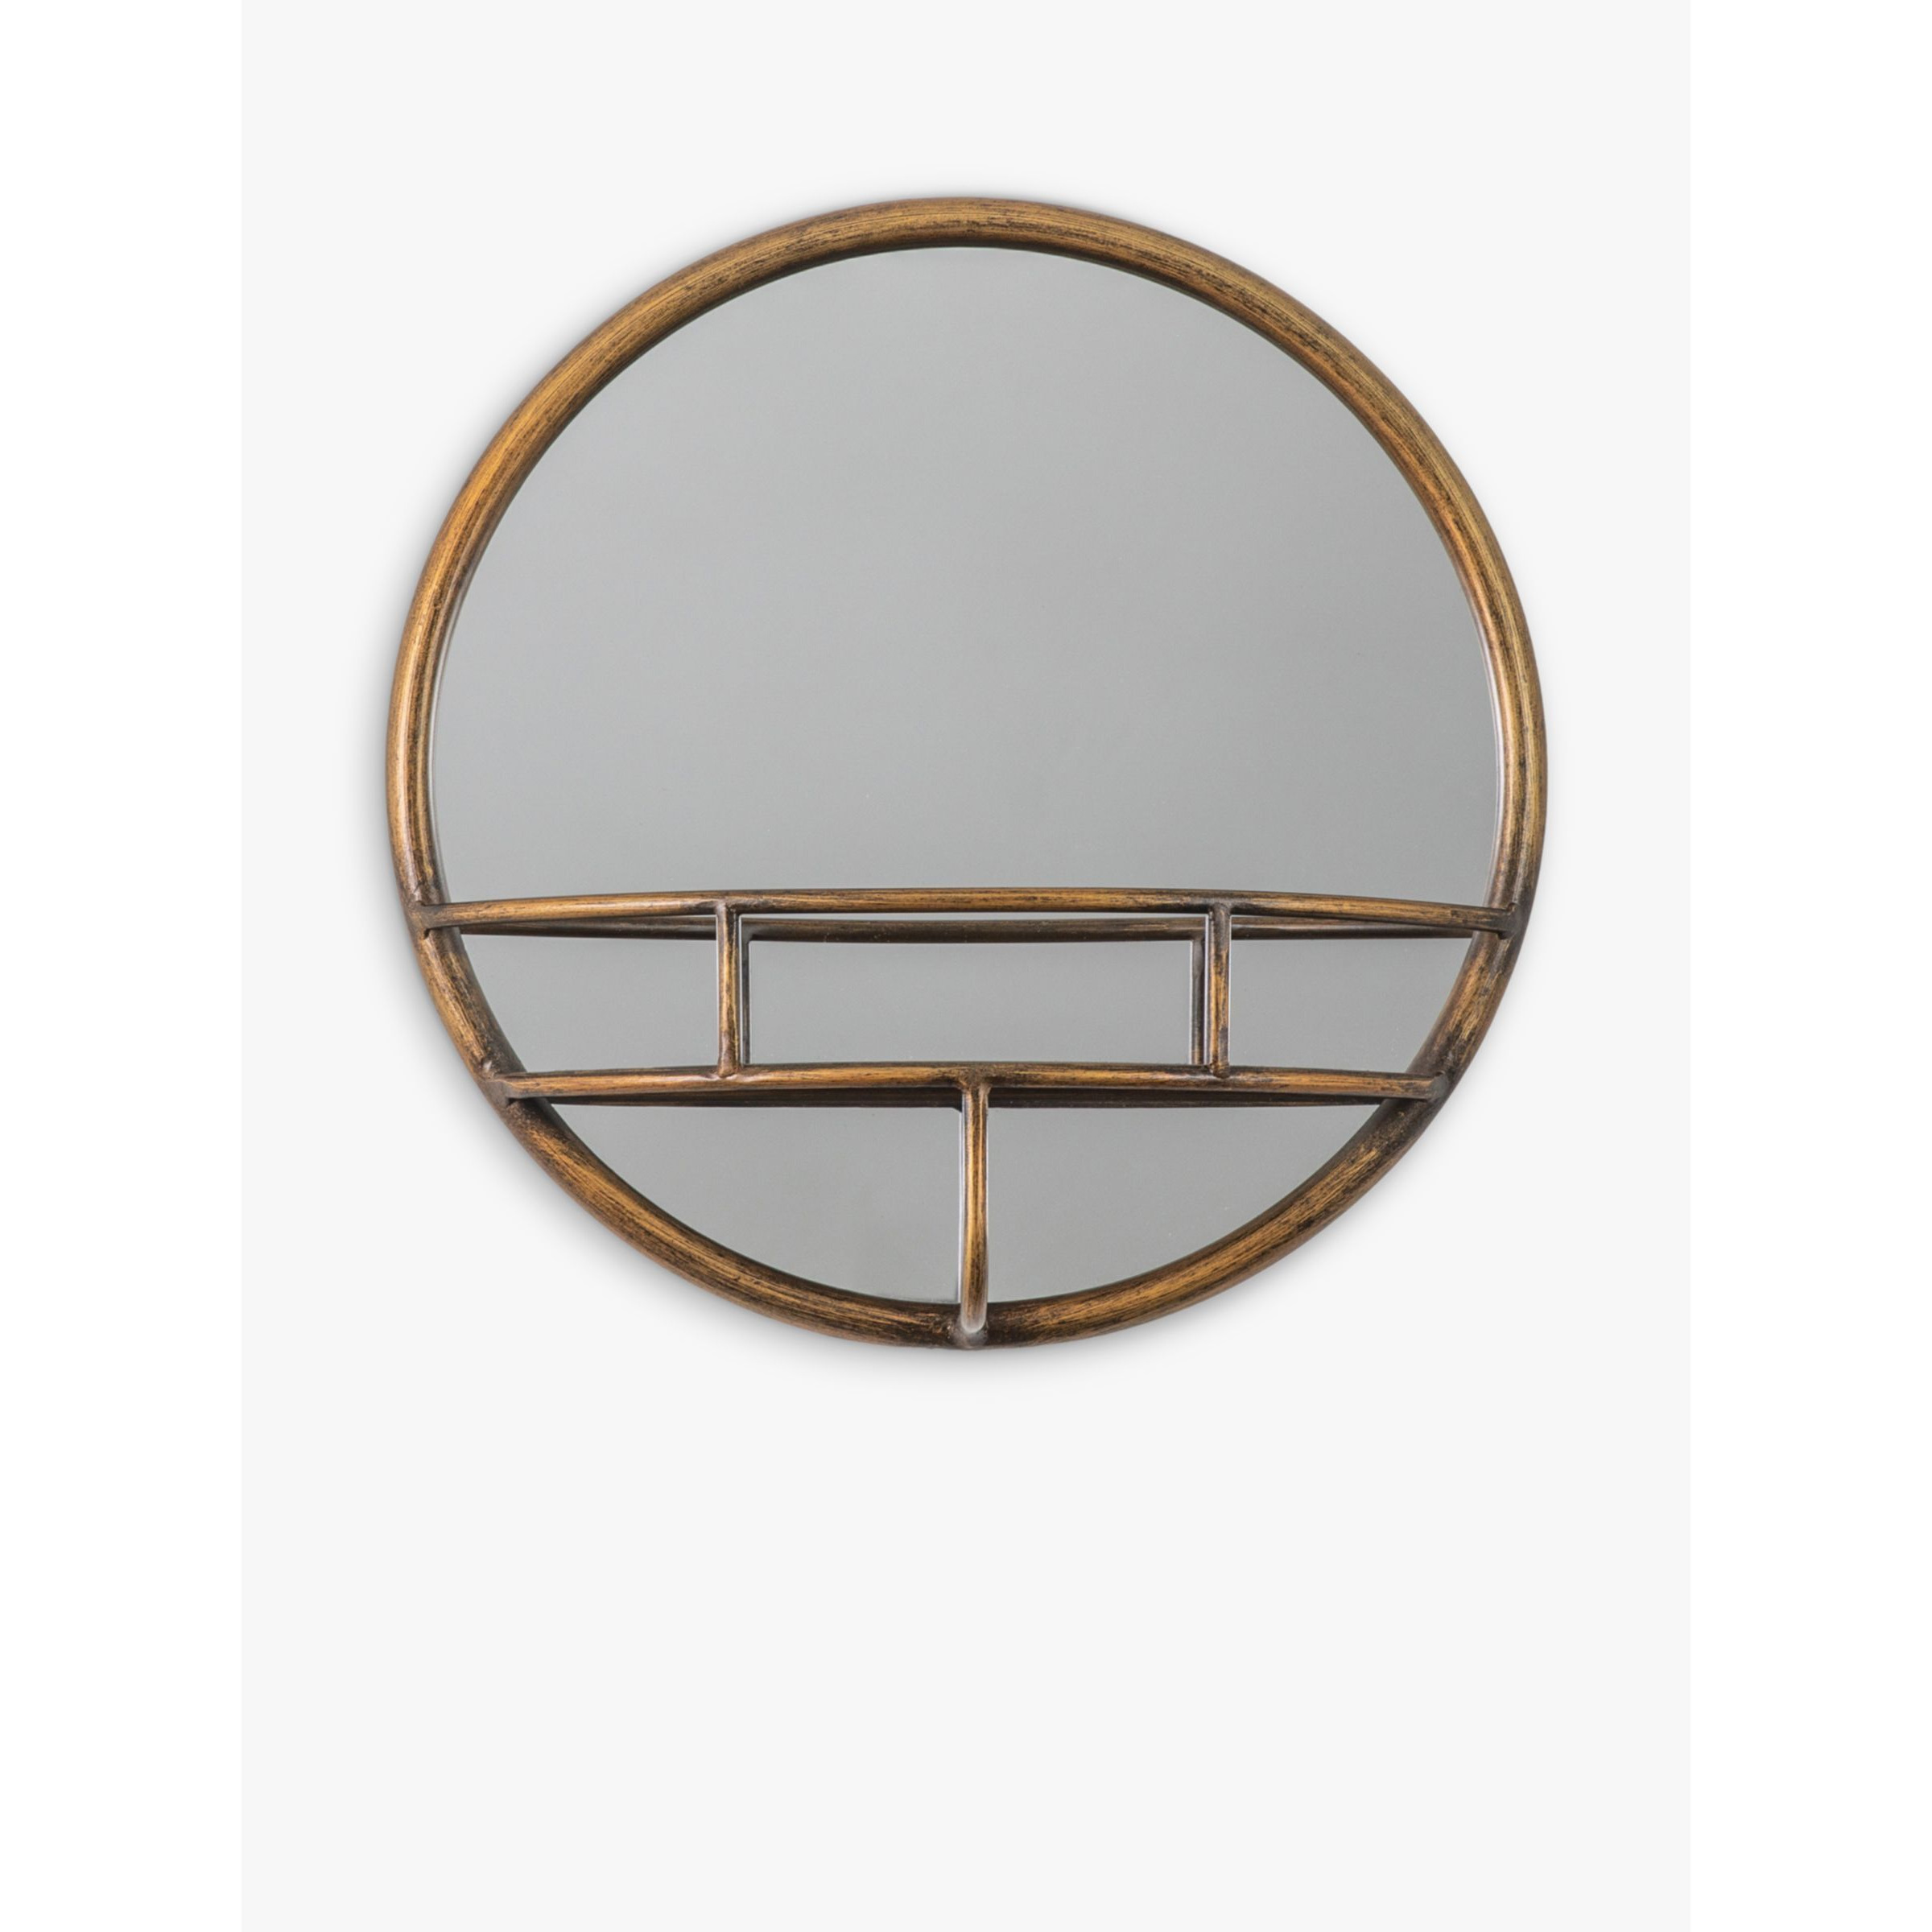 Gallery Direct Milton Round Metal Wall Mirror & Shelf, 40cm - image 1